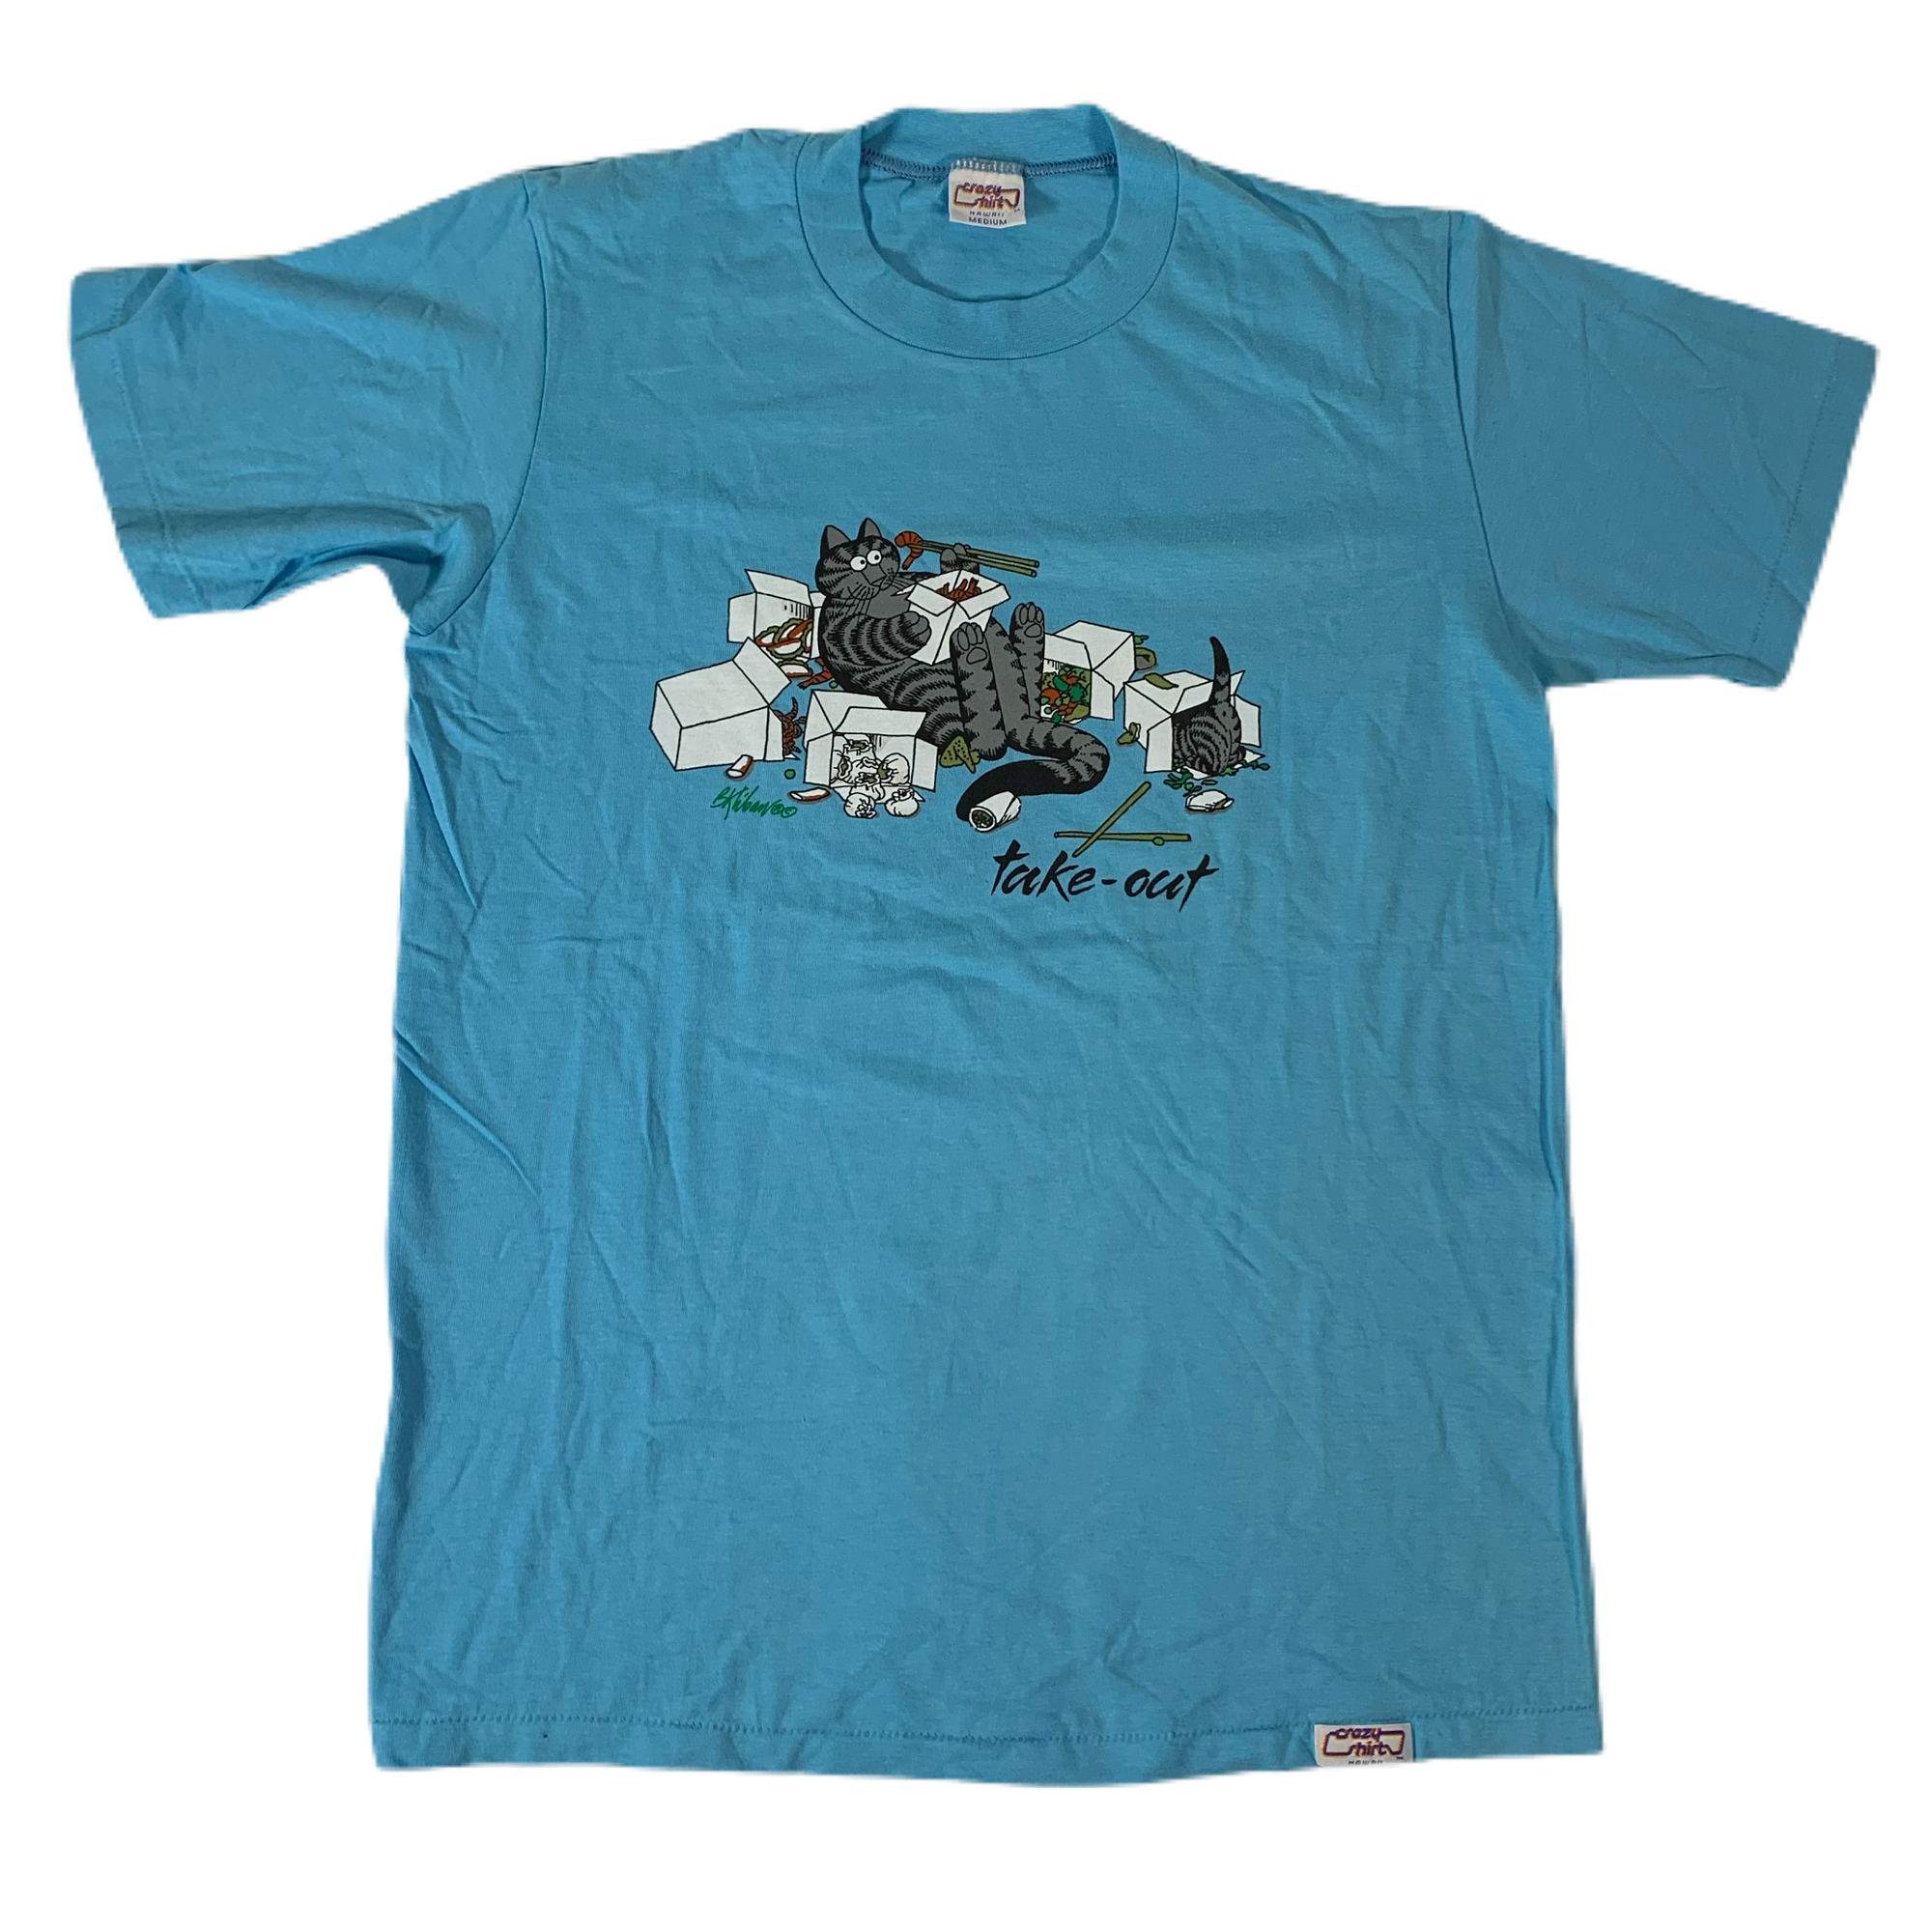 Vintage B. Kliban "Take-Out" Crazy Shirts T-Shirt - jointcustodydc